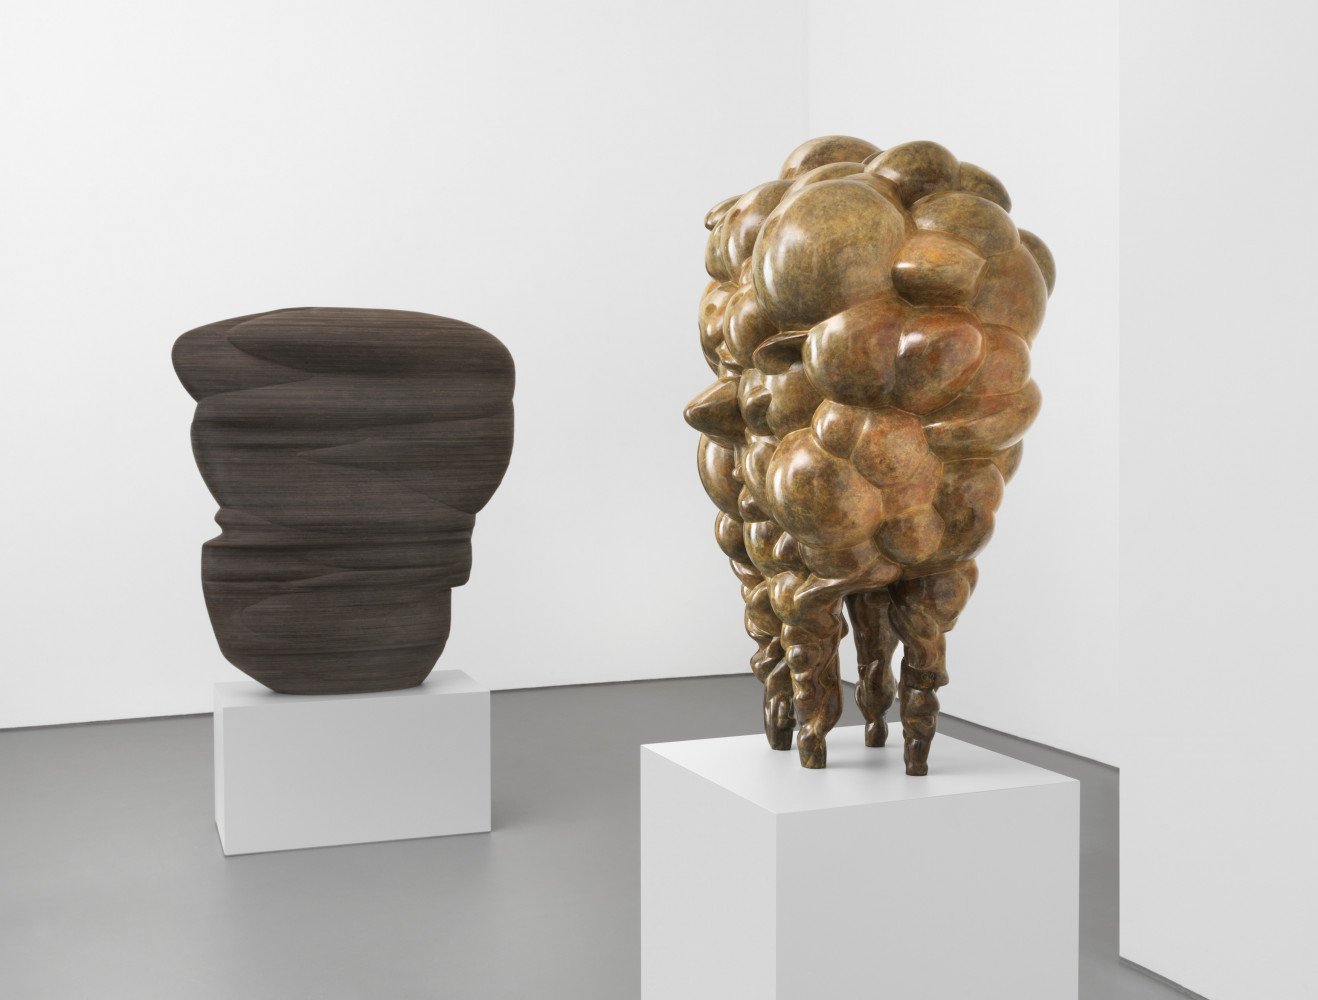 Shop Show: Tony Cragg's New Sculptures Reimagine the Fundamental Building Blocks of Nature the Human Body